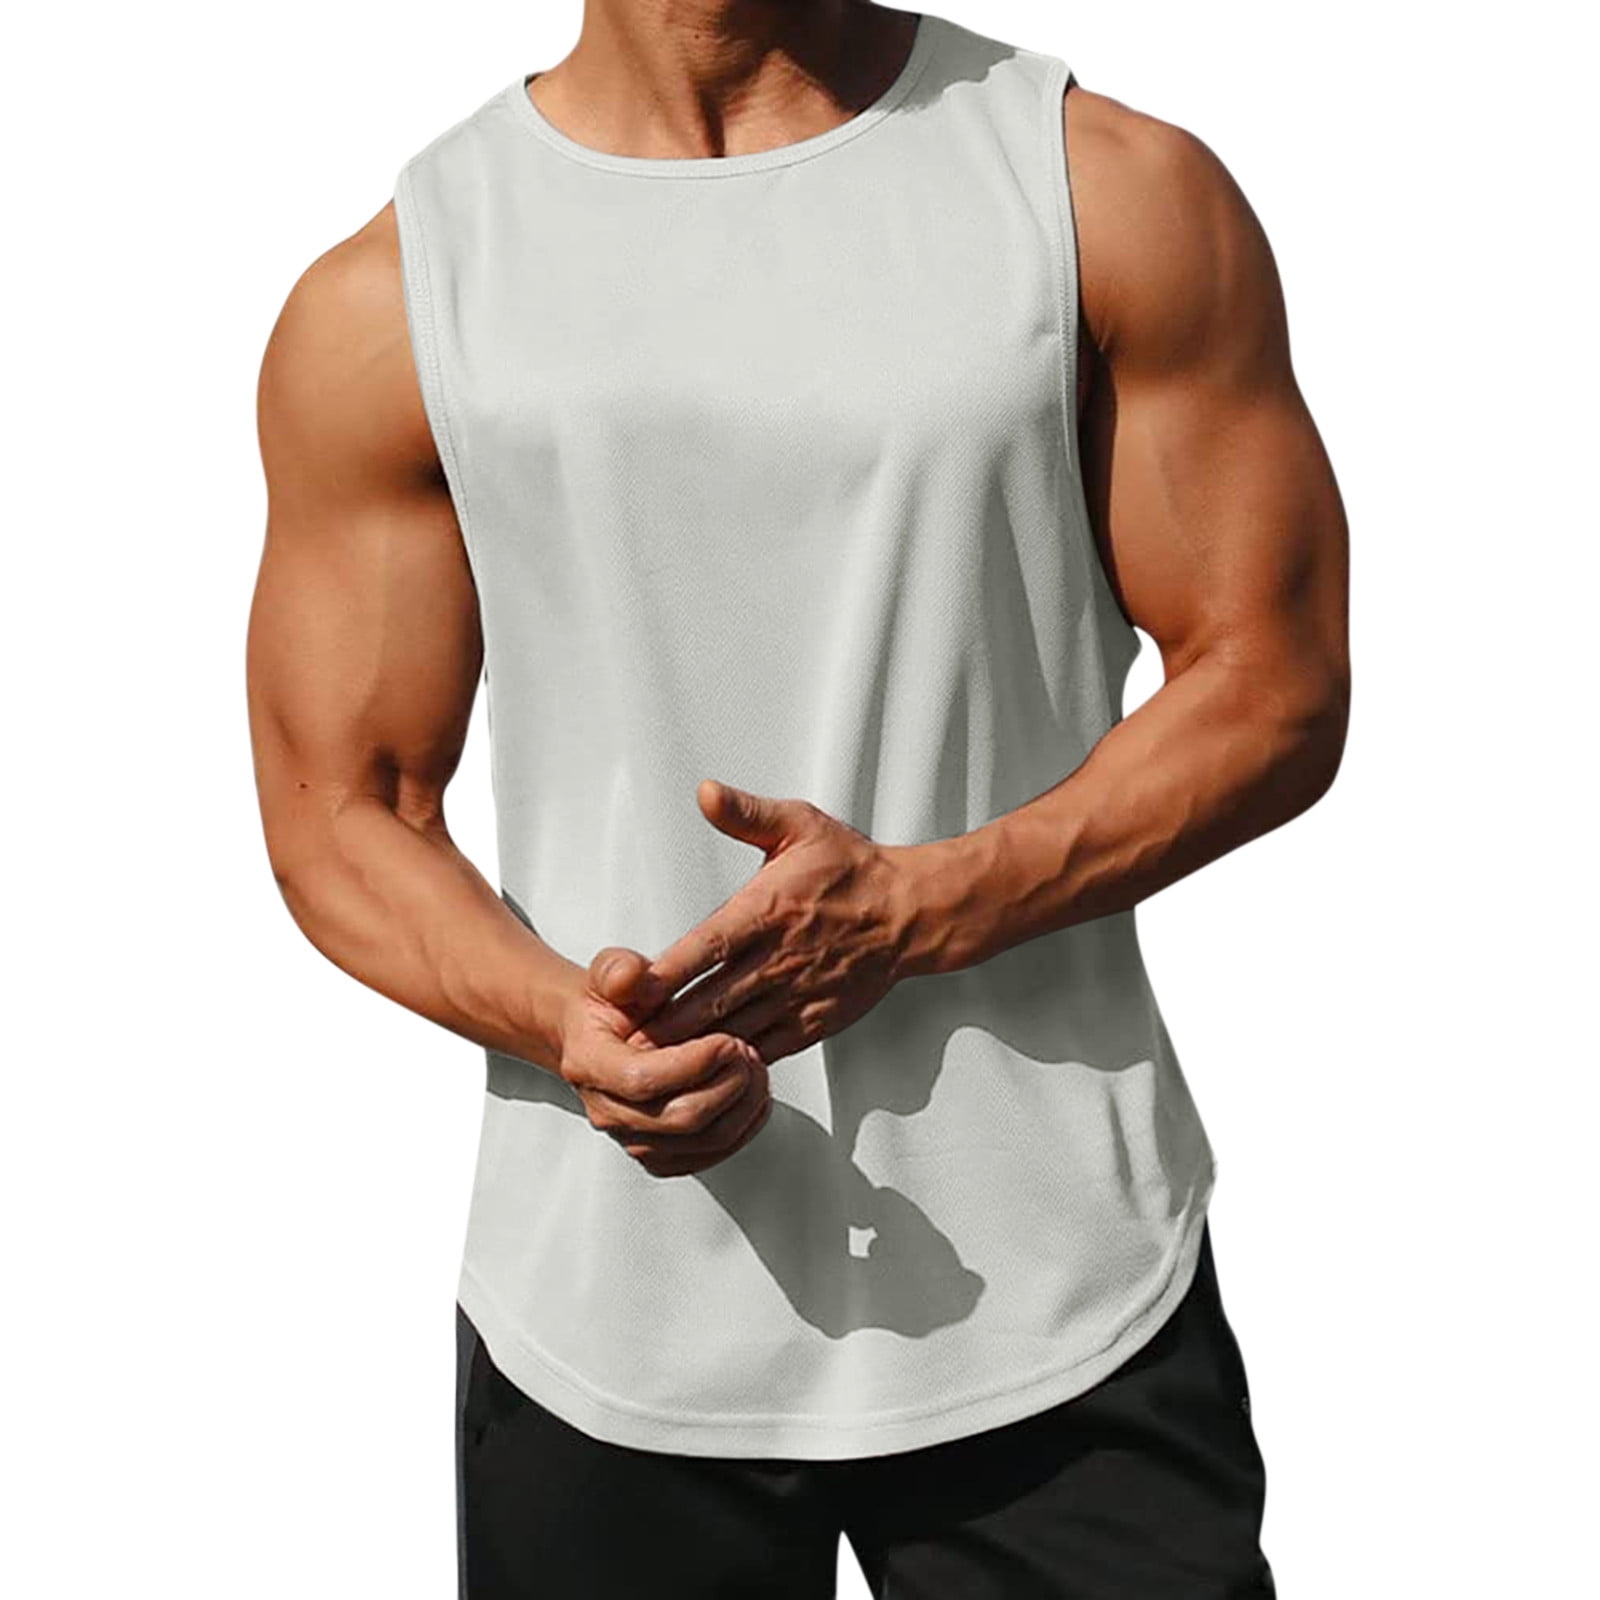 adviicd Tank Tops Men Gym Men's Running Athletic Tank Top Quick Dry Workout  Gym Swim Beach Sports Sleeveless Shirts White,L 